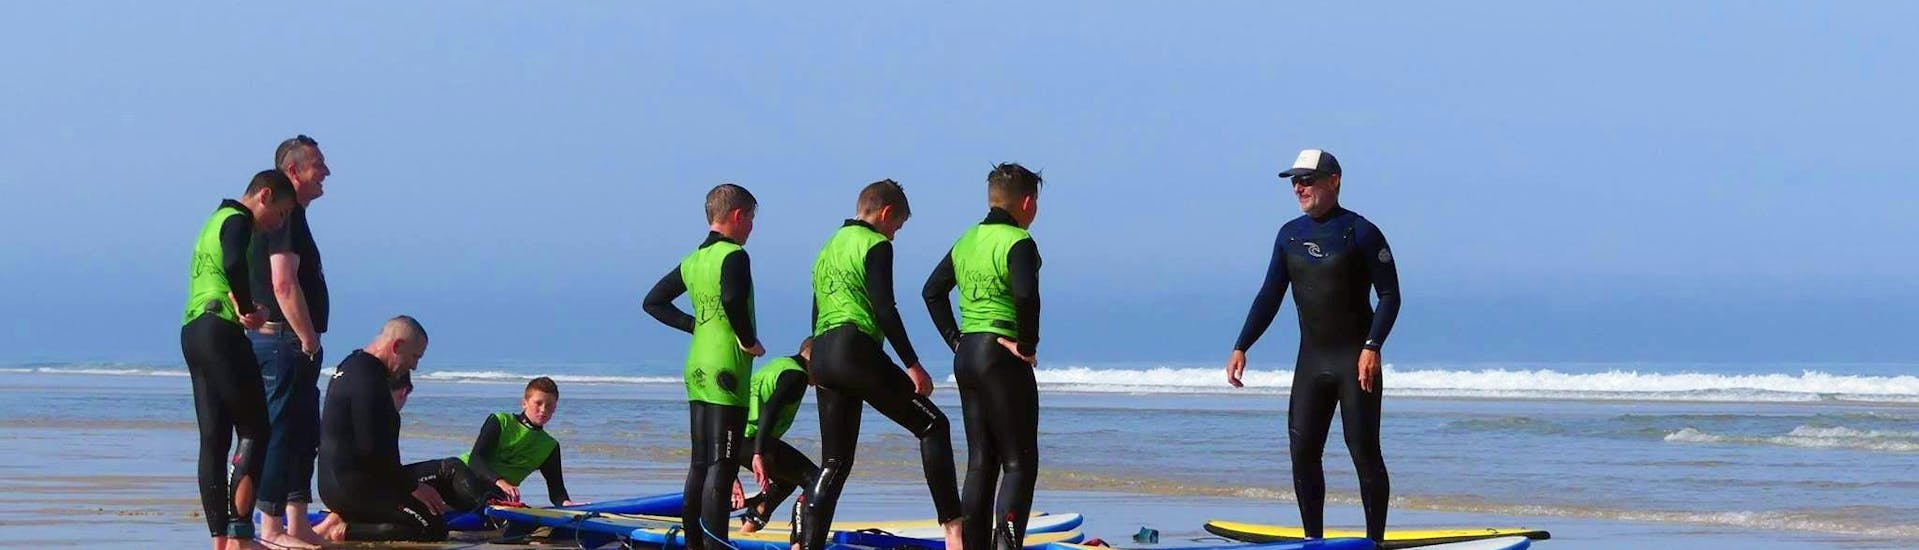 Surflessen (vanaf 9 jaar) op Messanges South Beach.